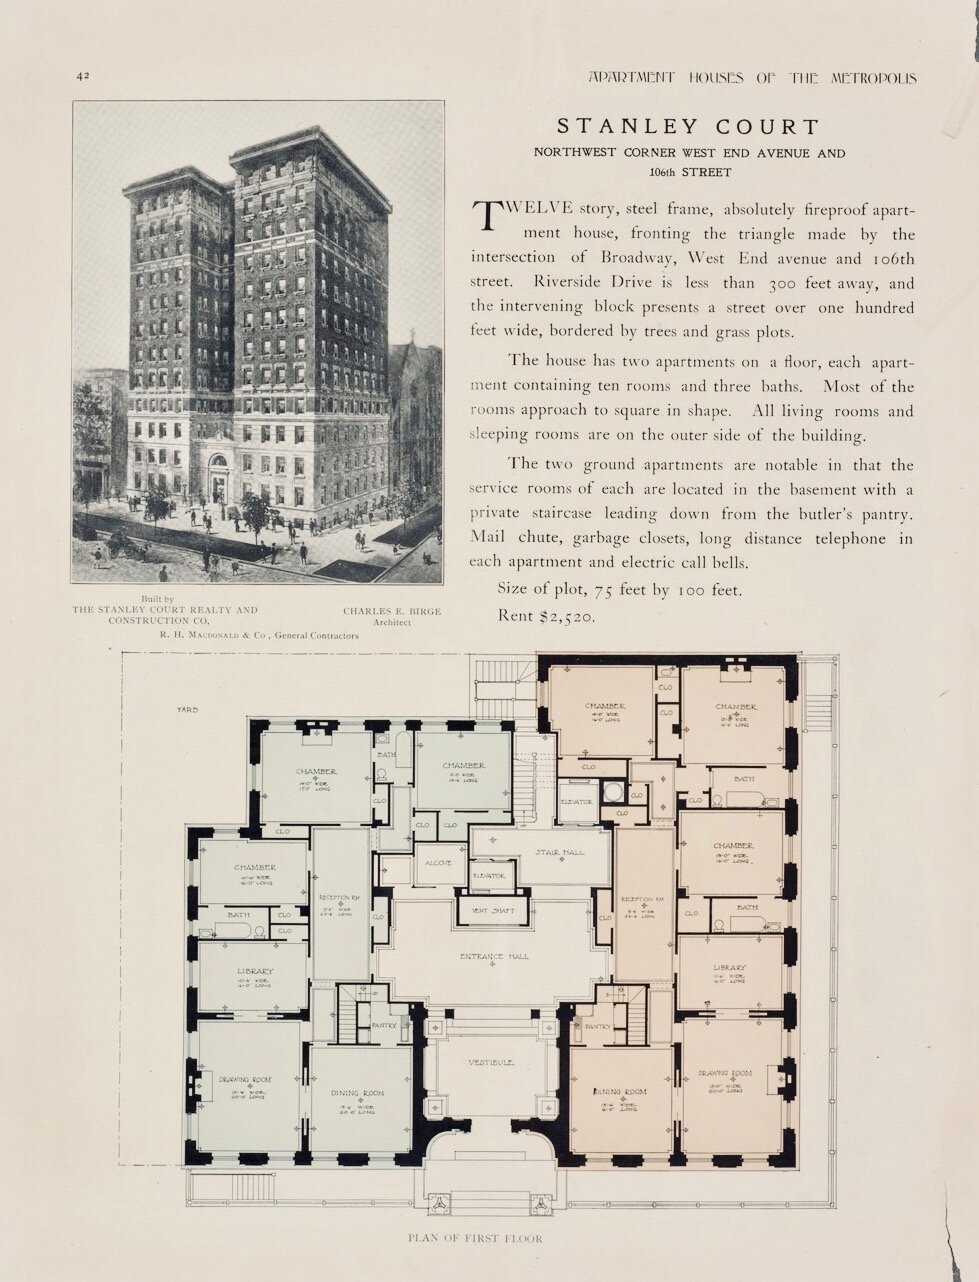 Stanley Court (1905)(NYPL).jpg